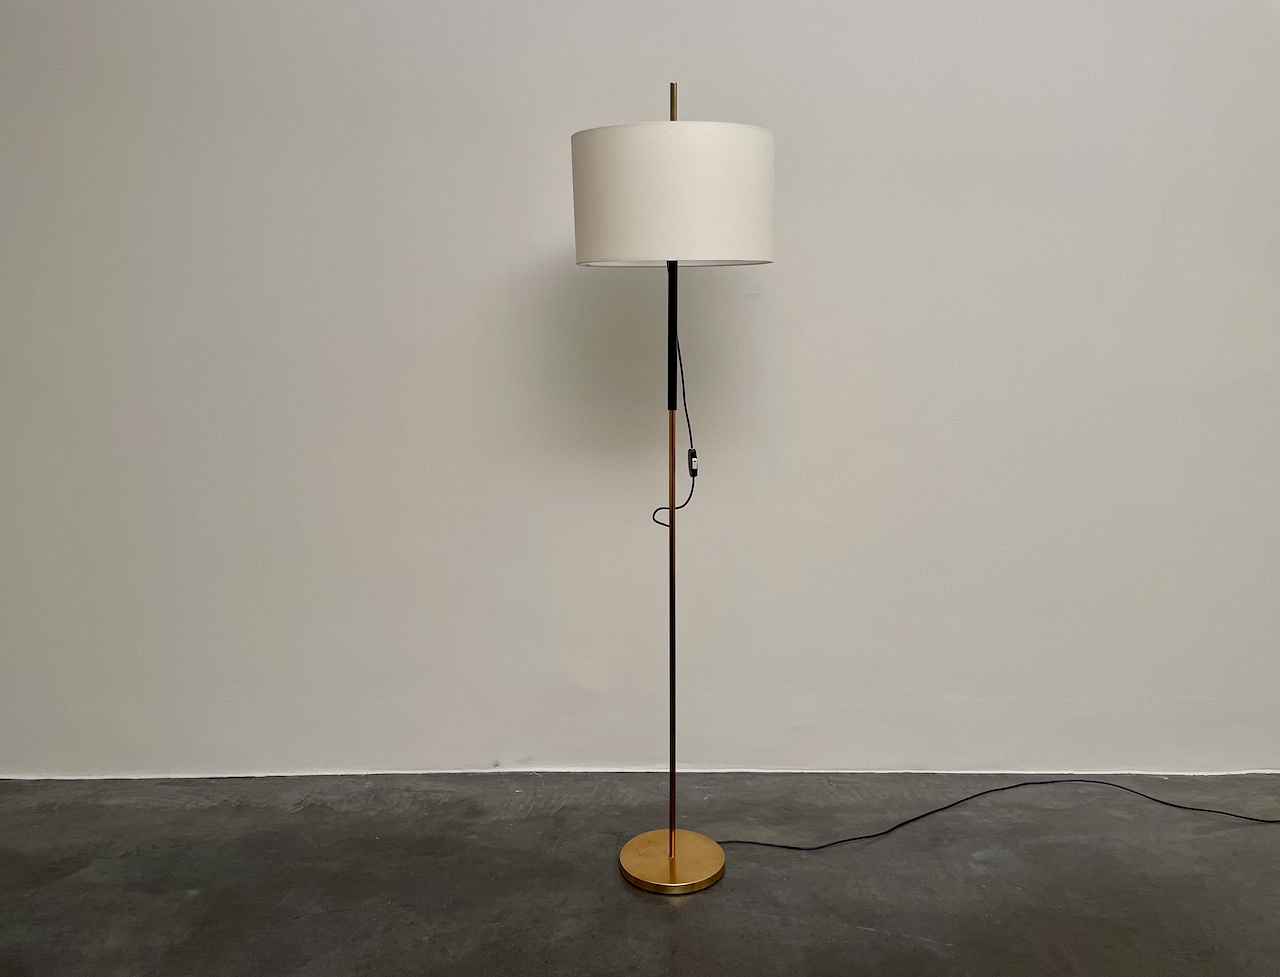 Lamp by G. Ostuni